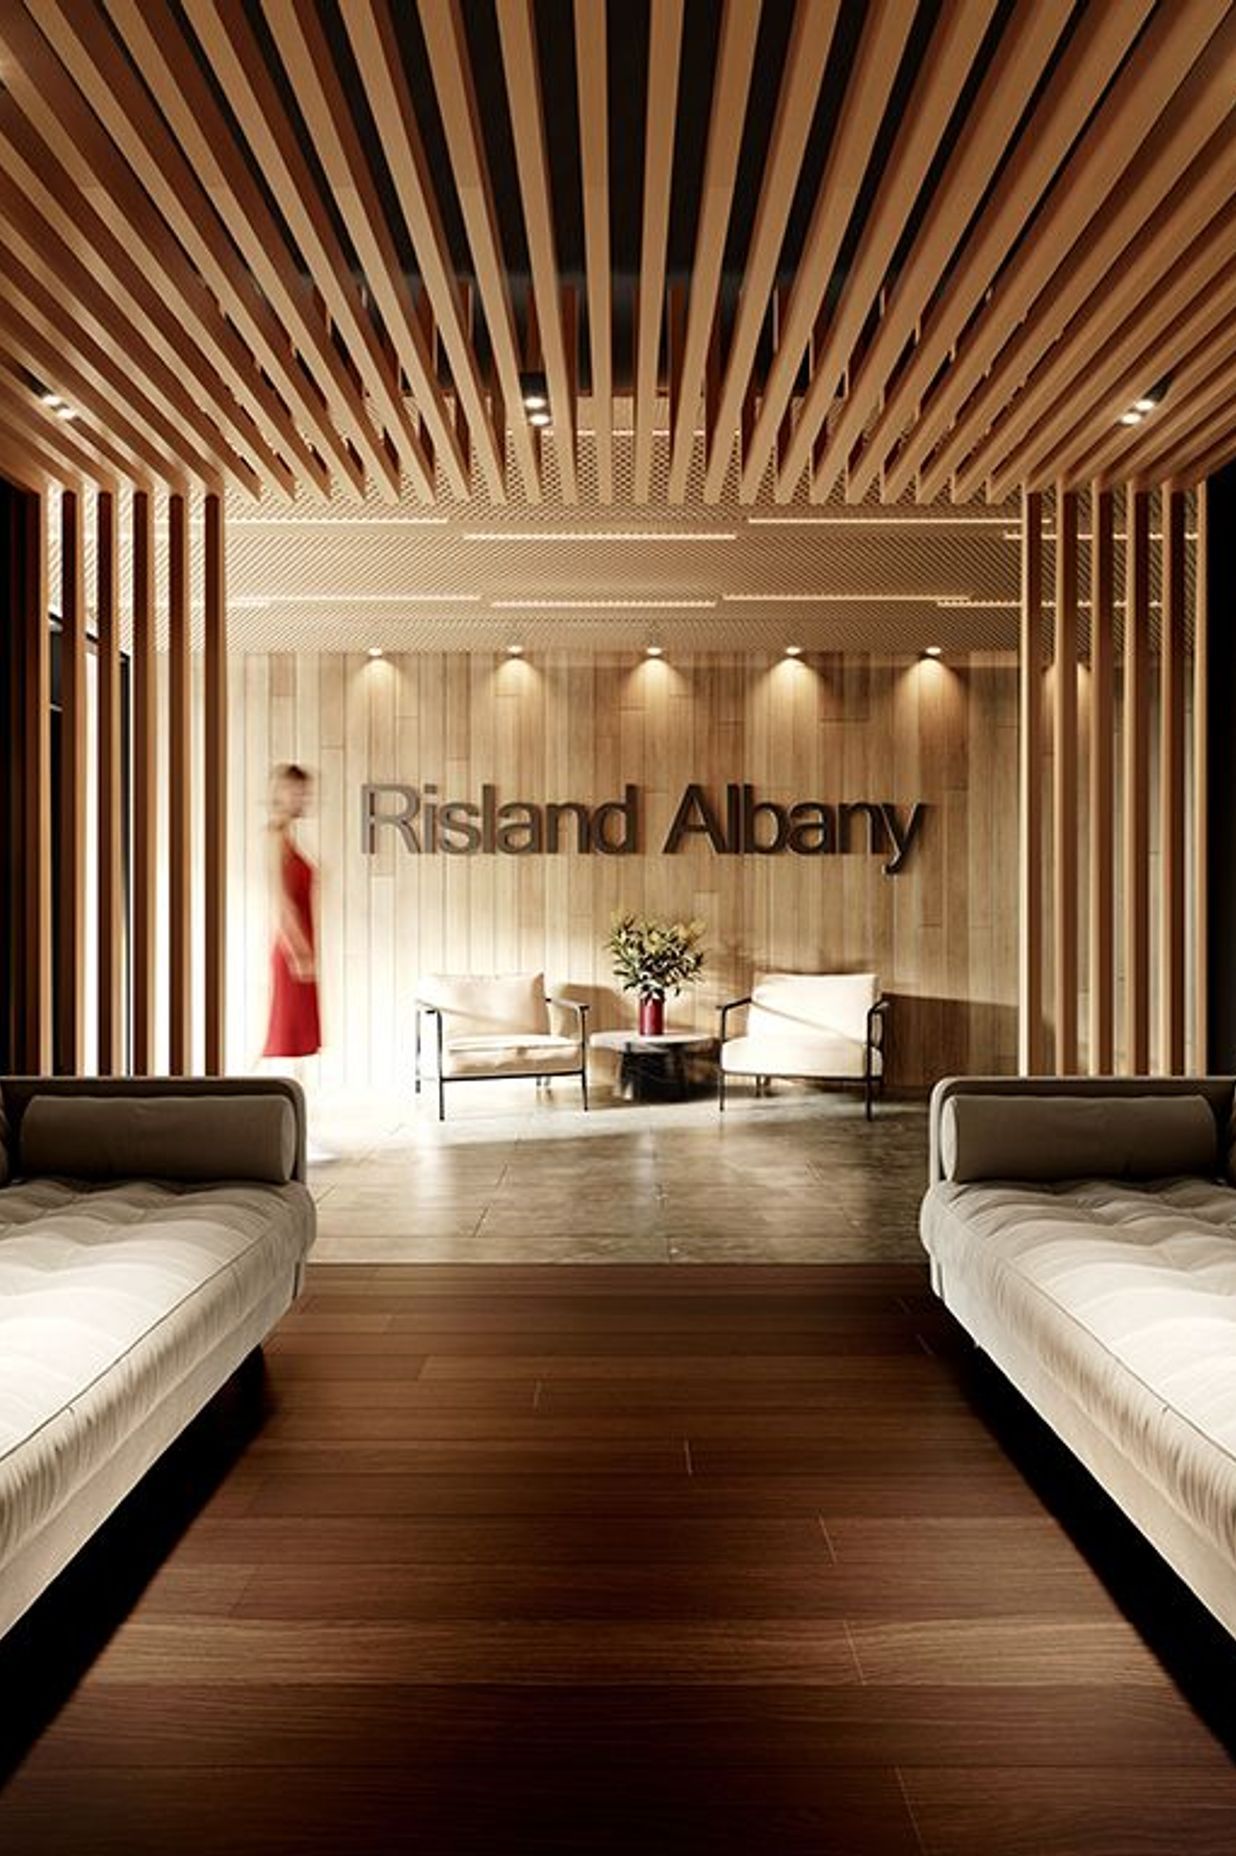 Risland Albany